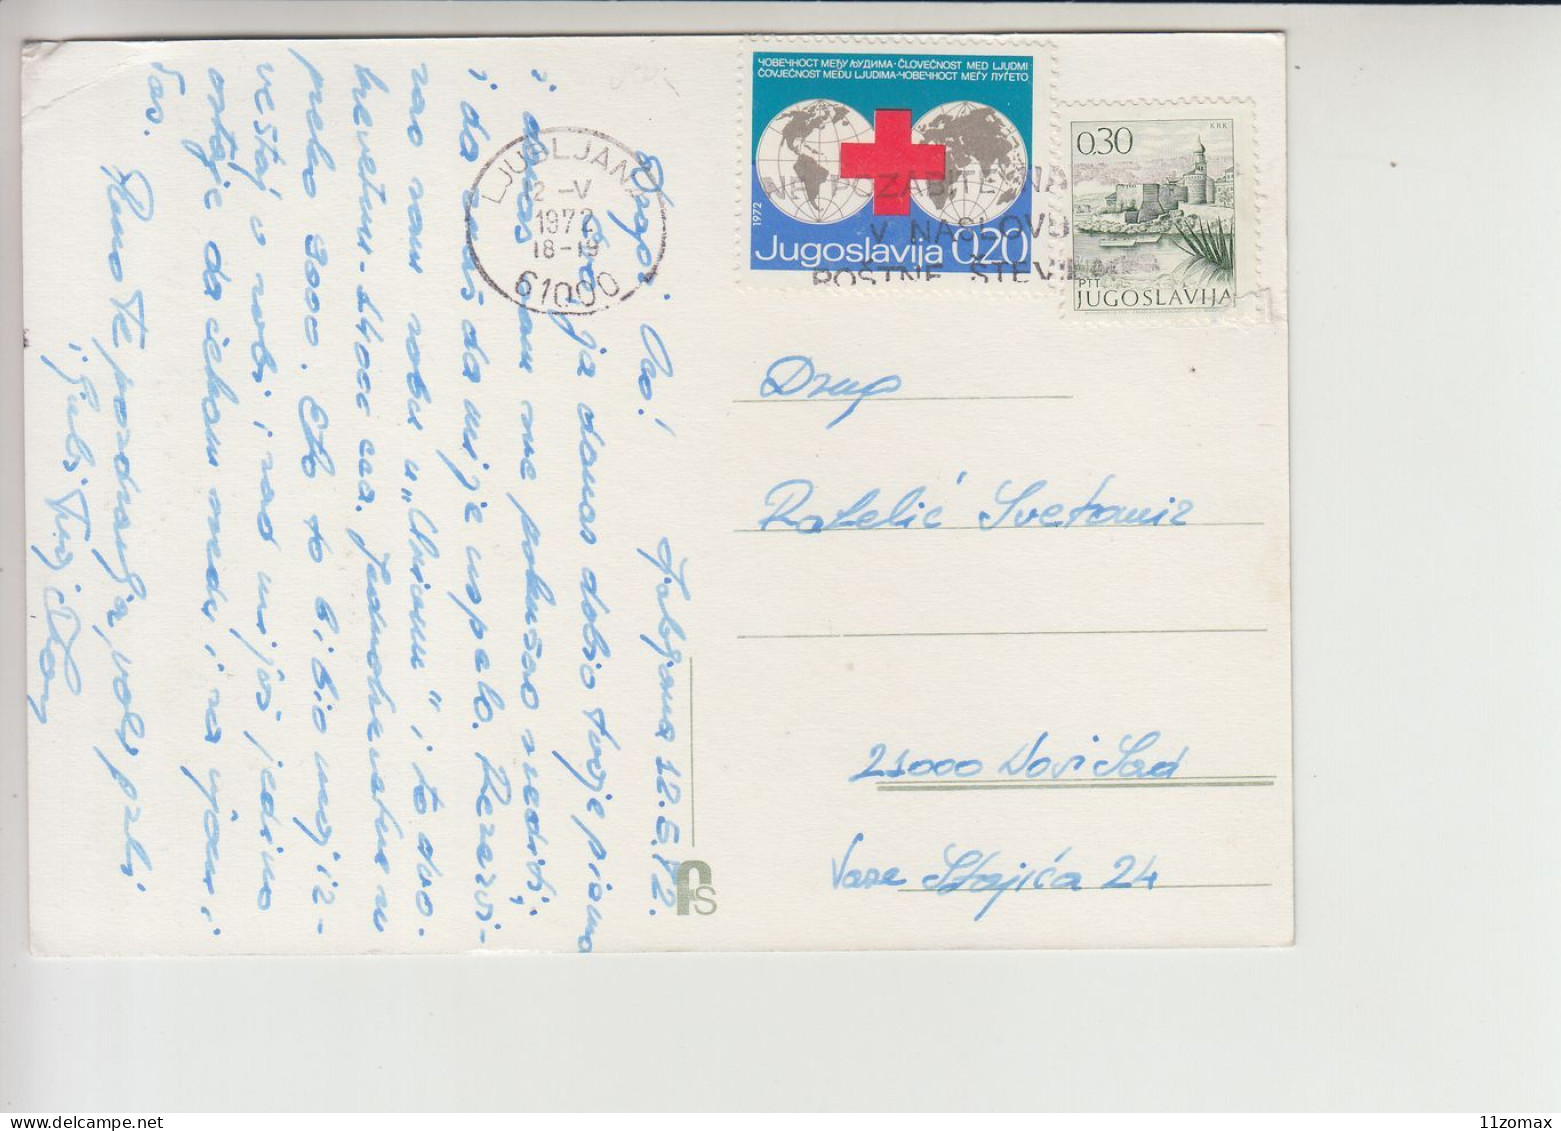 Ljubljana Cancelation Red Cross Surcharge 1972 (sl012) Slovenia - Lettres & Documents